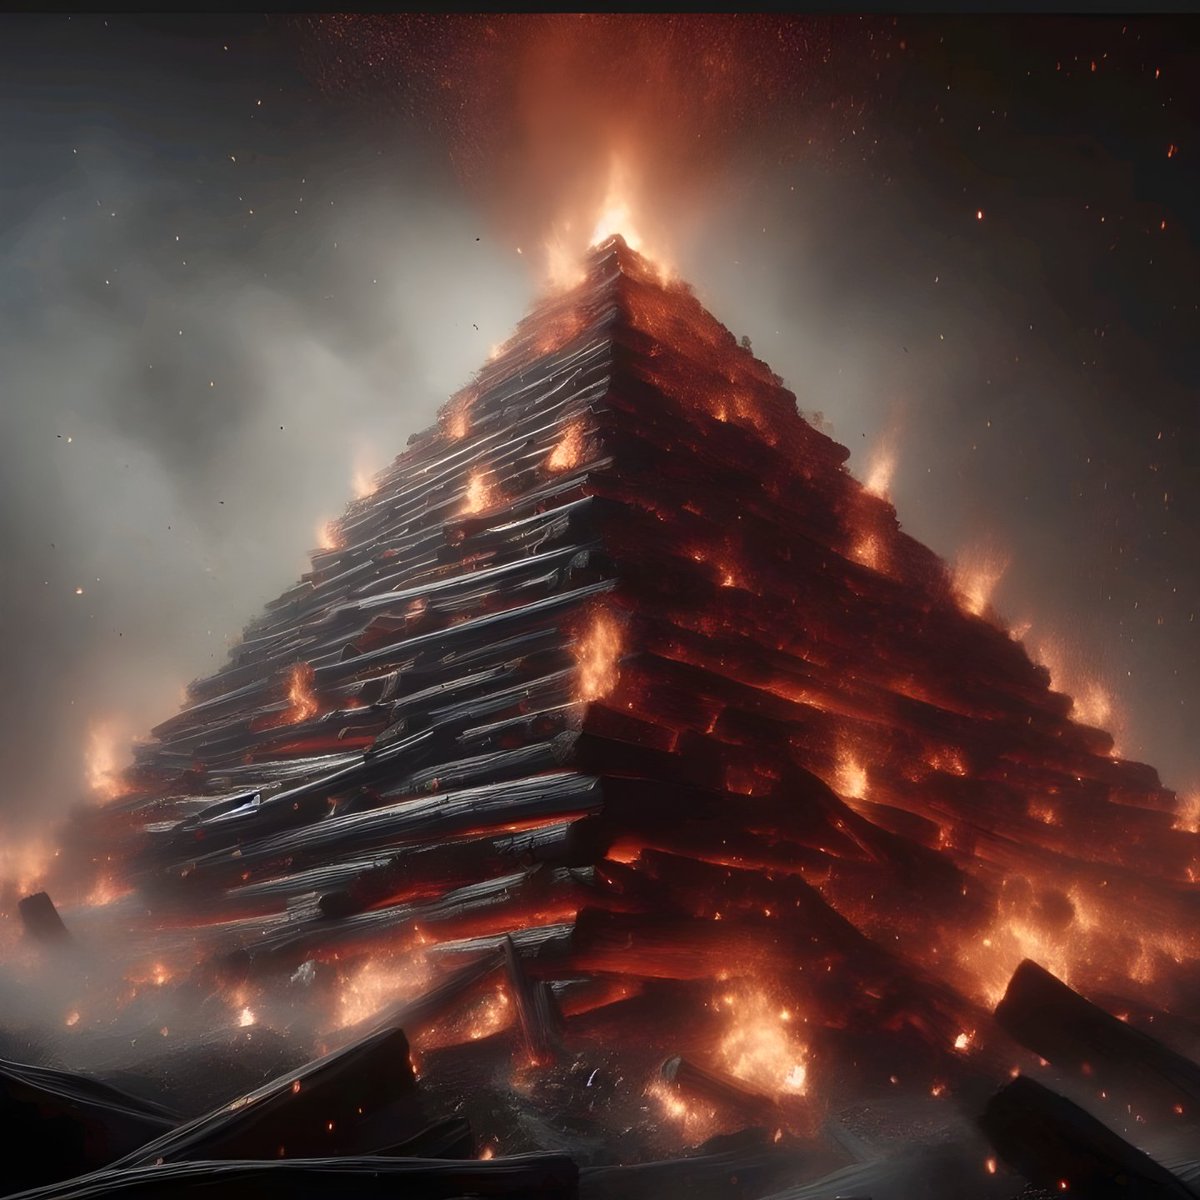 Charcoal Pyramid of Giza
#AIart